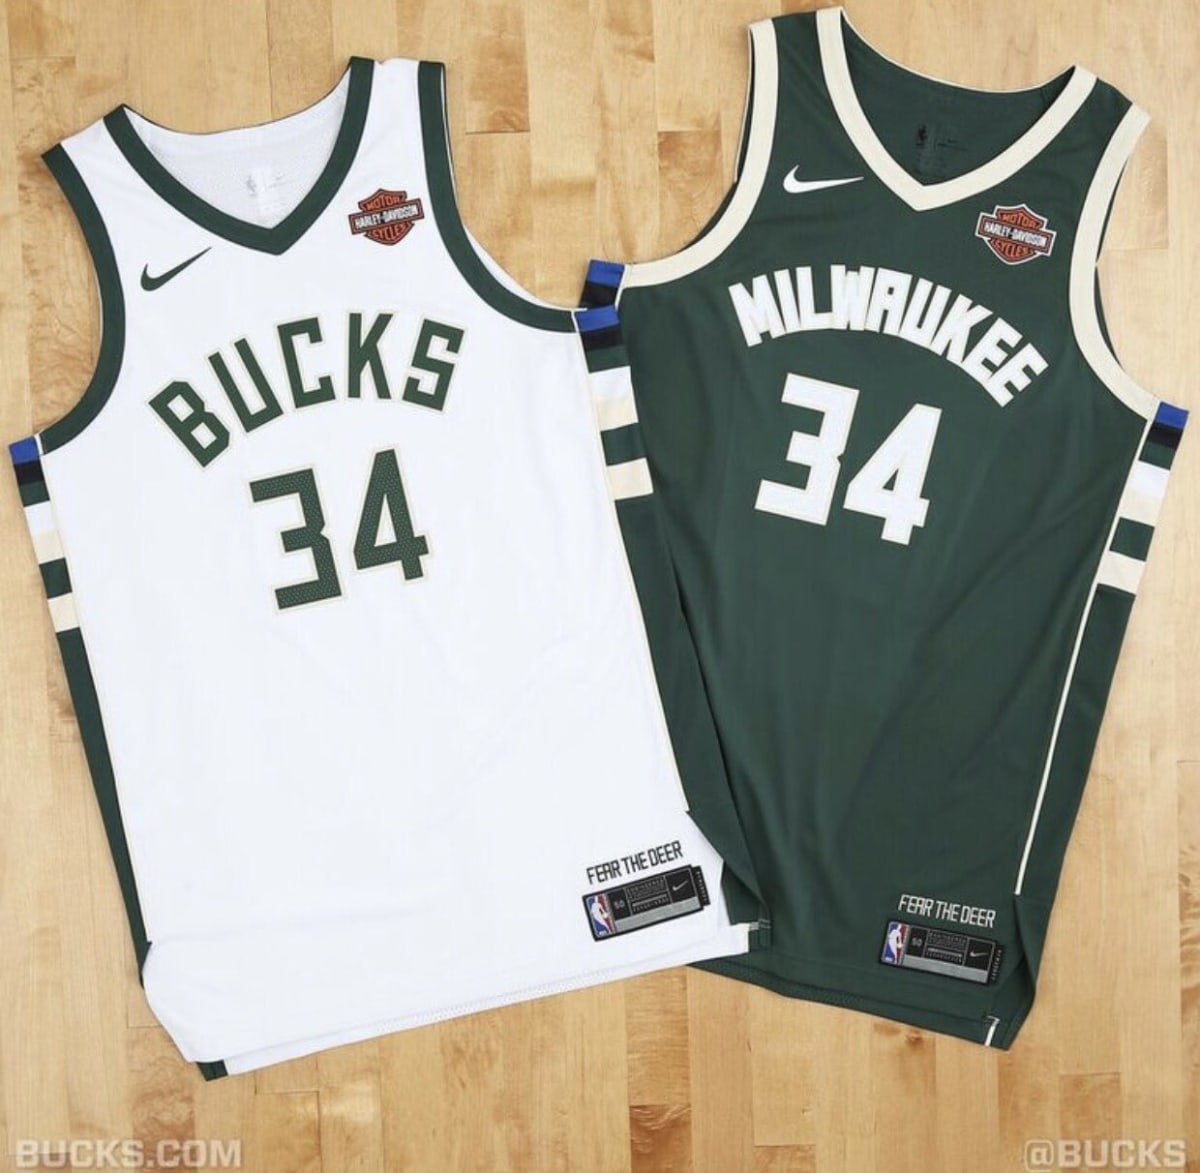 Nike Milwaukee Bucks Uniform - Every 2017 Nike NBA Jersey So Far | Sole Collector